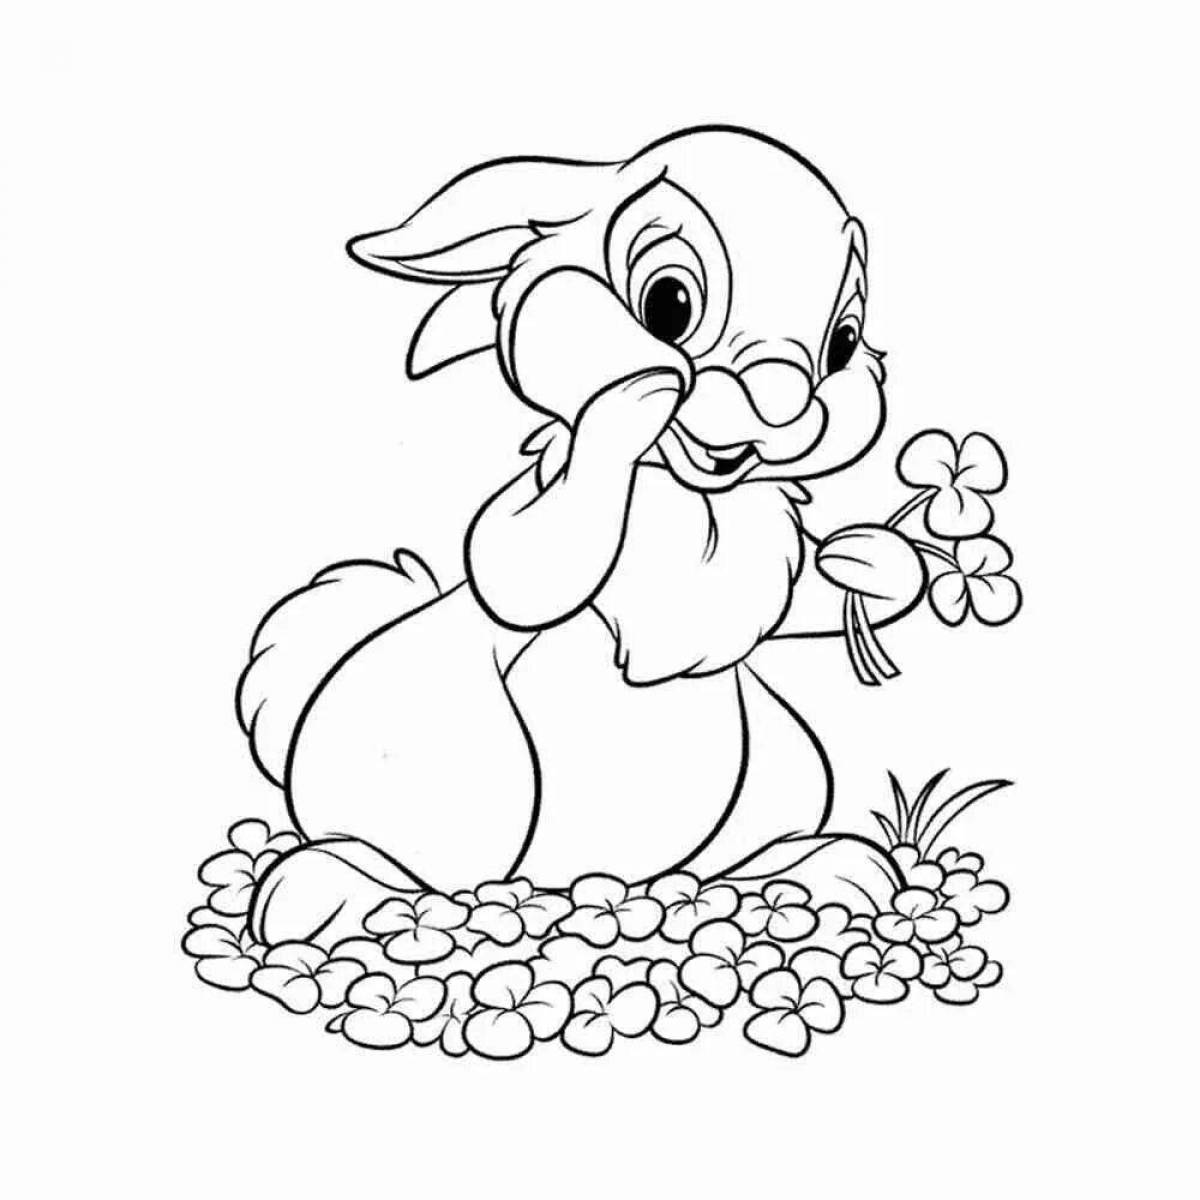 Bunny bunny coloring page